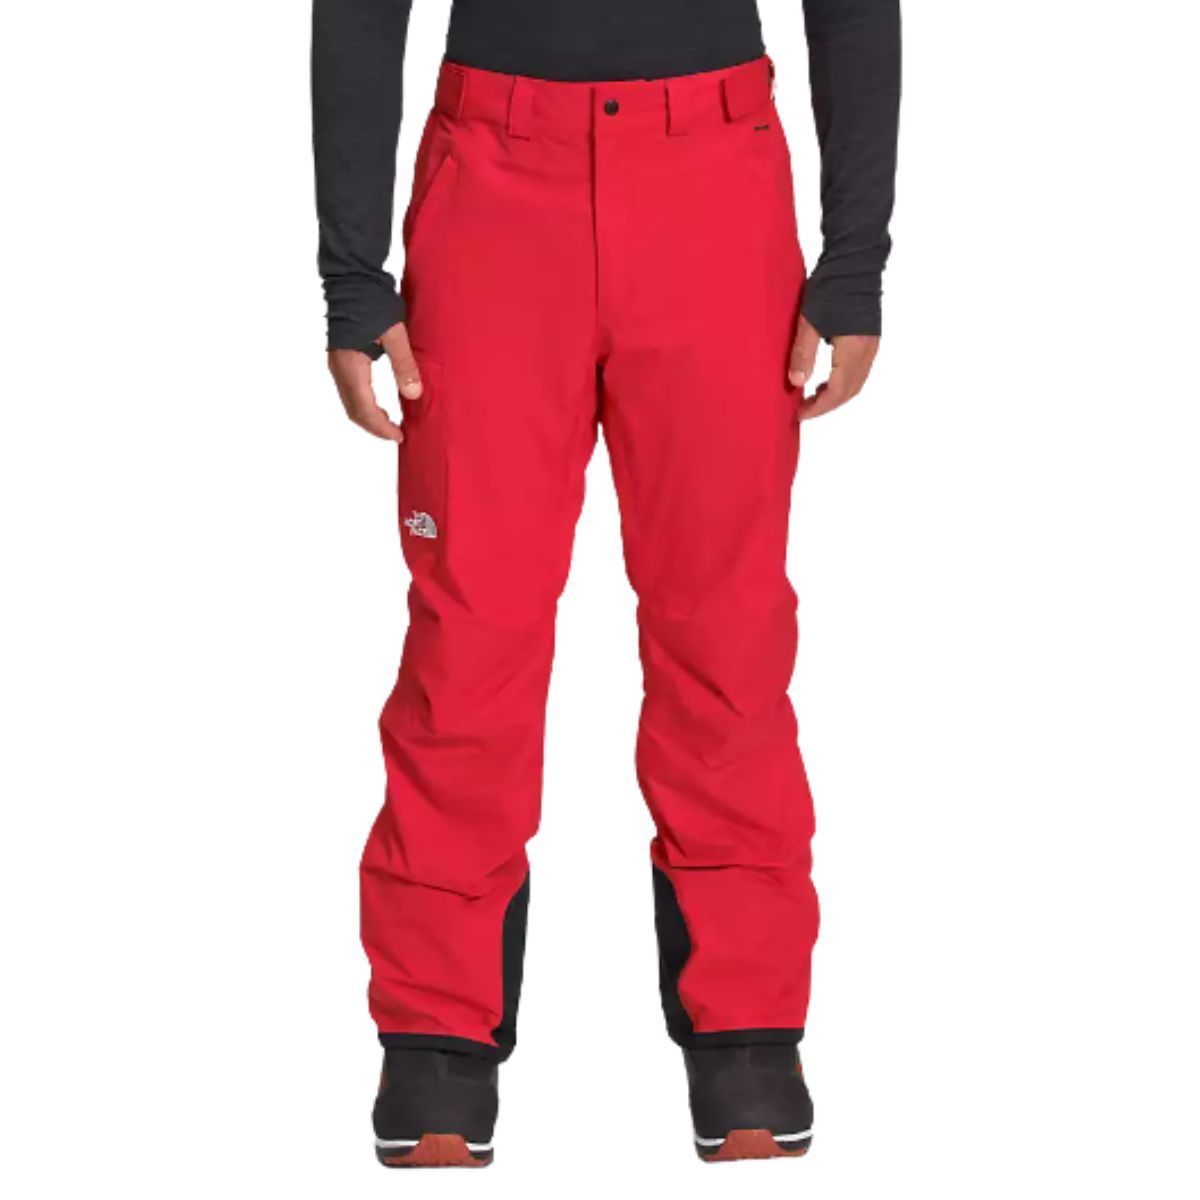 BNSSOL Men Winter Ski Pants with Shoulder Straps Snow Pants for Skiing Man Sports Pants 